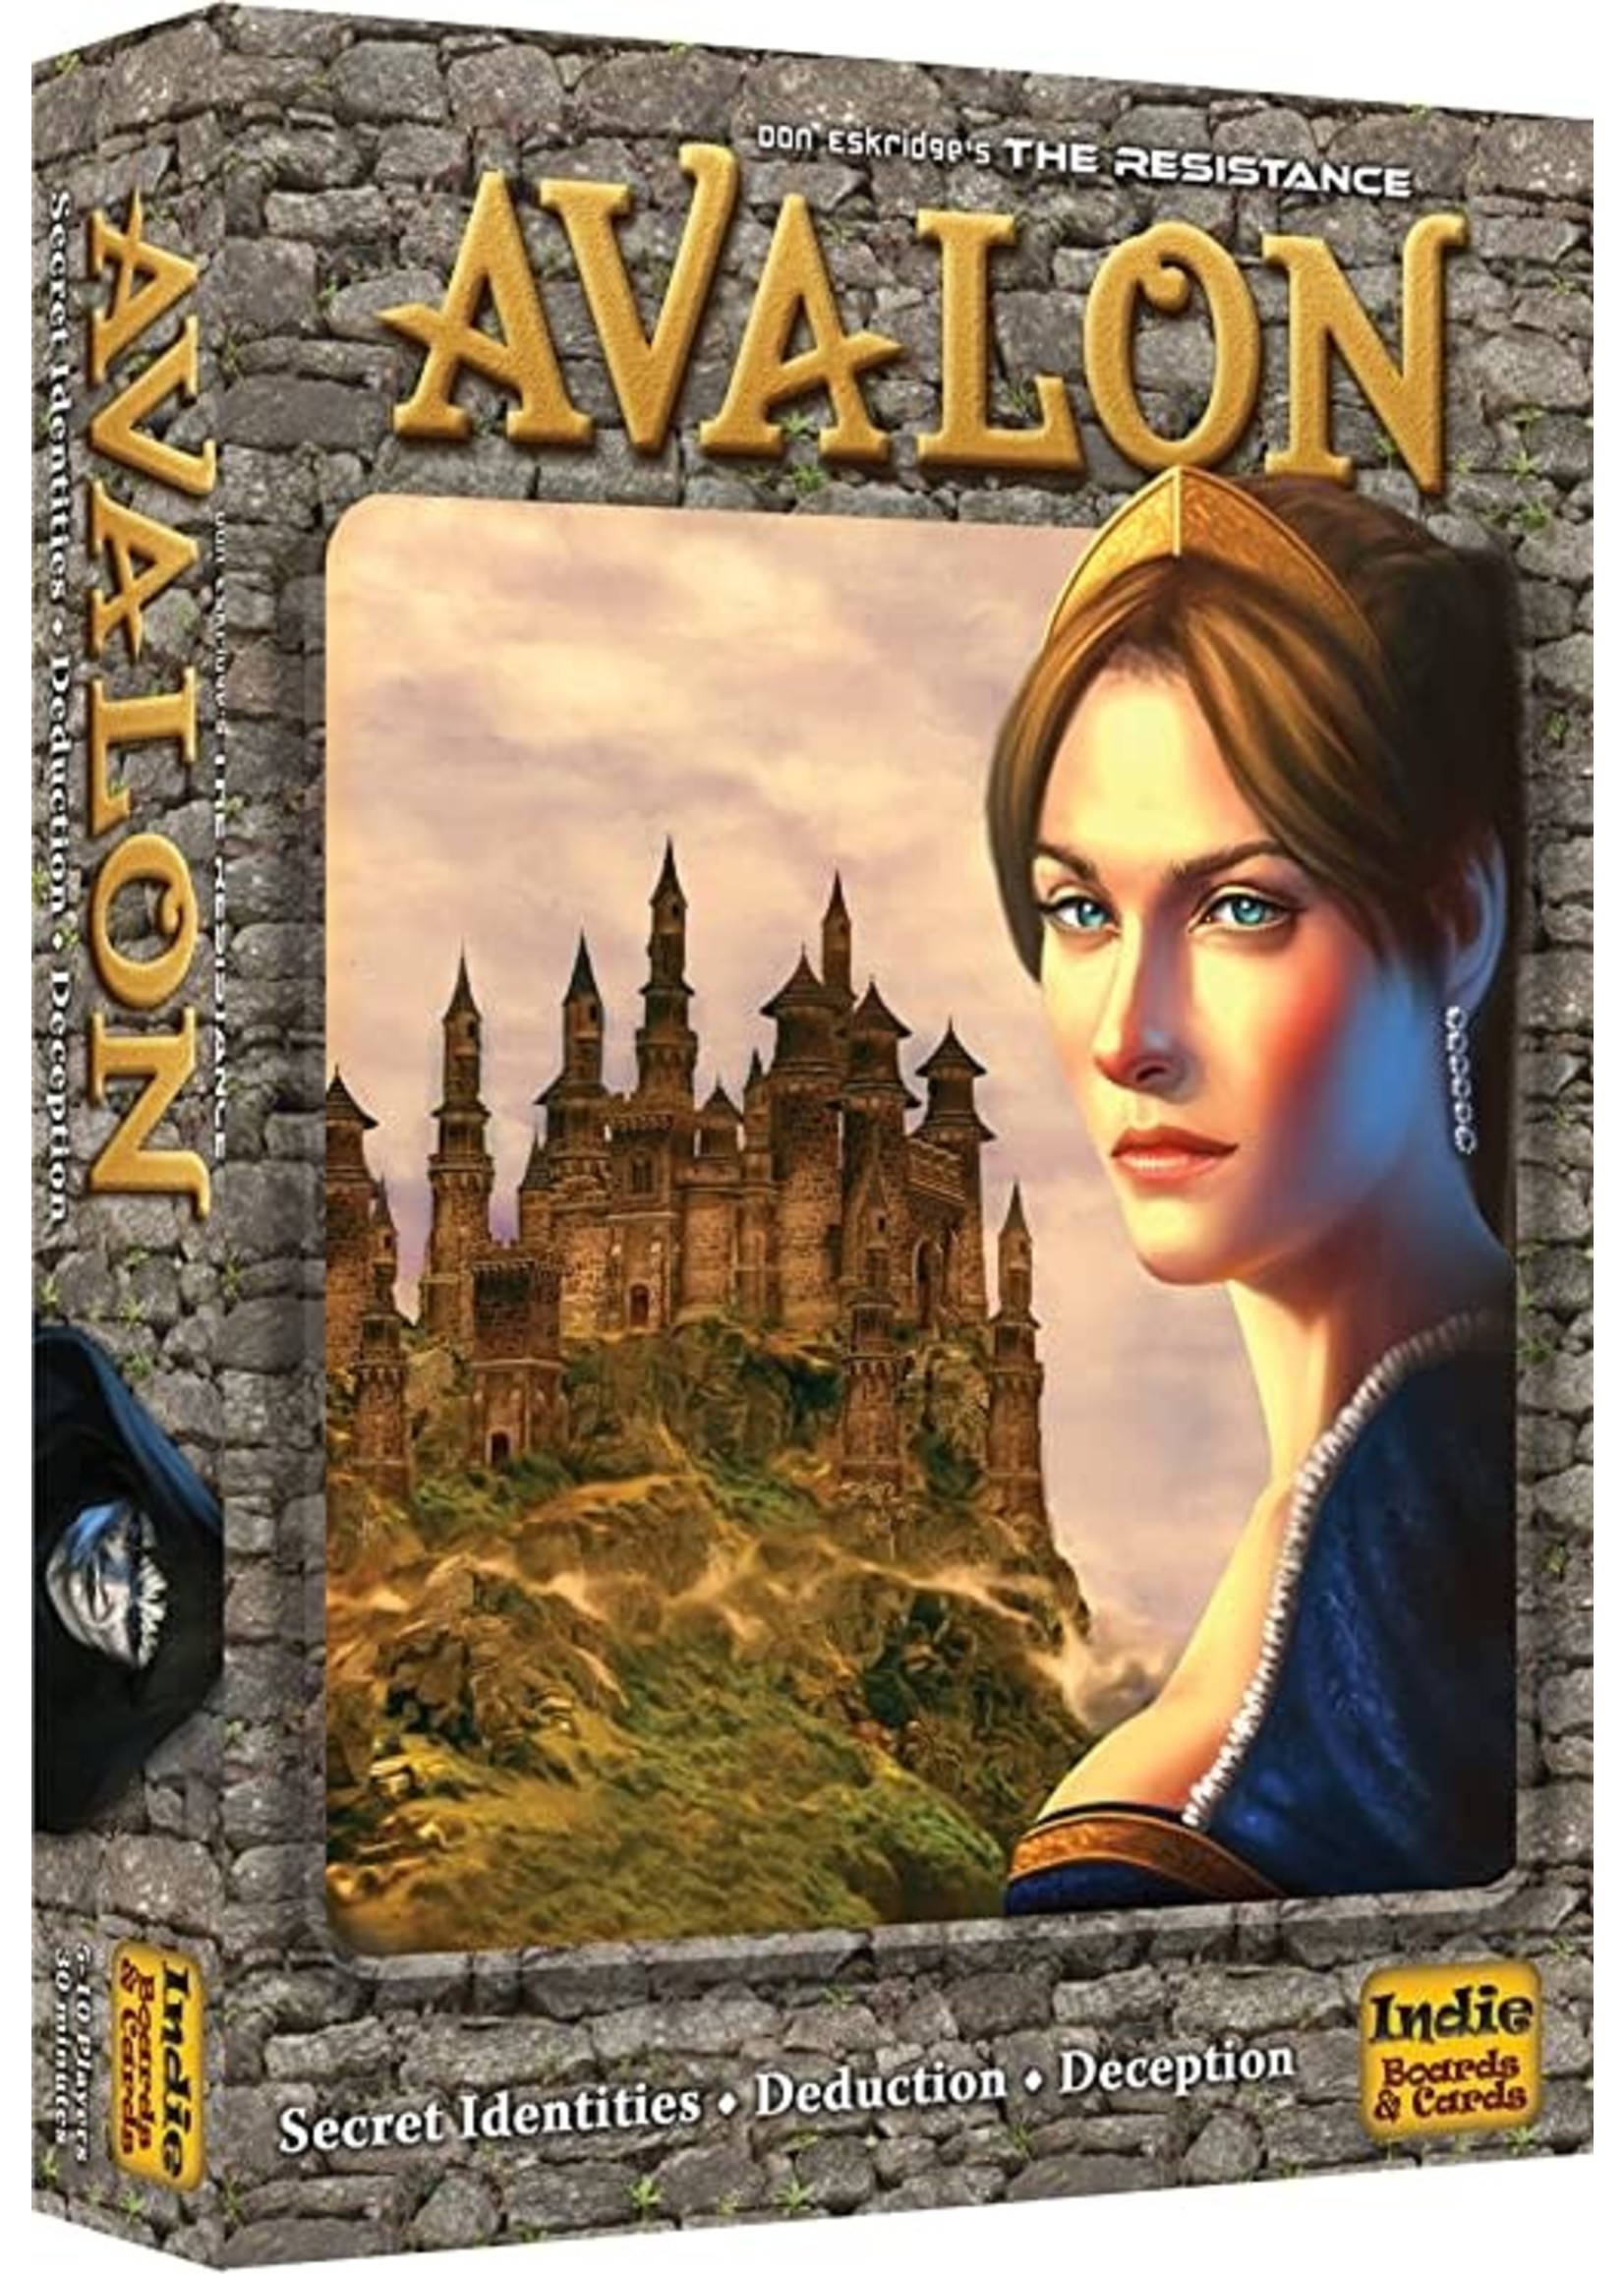 RENTAL - Resistance Avalon 9.2 oz